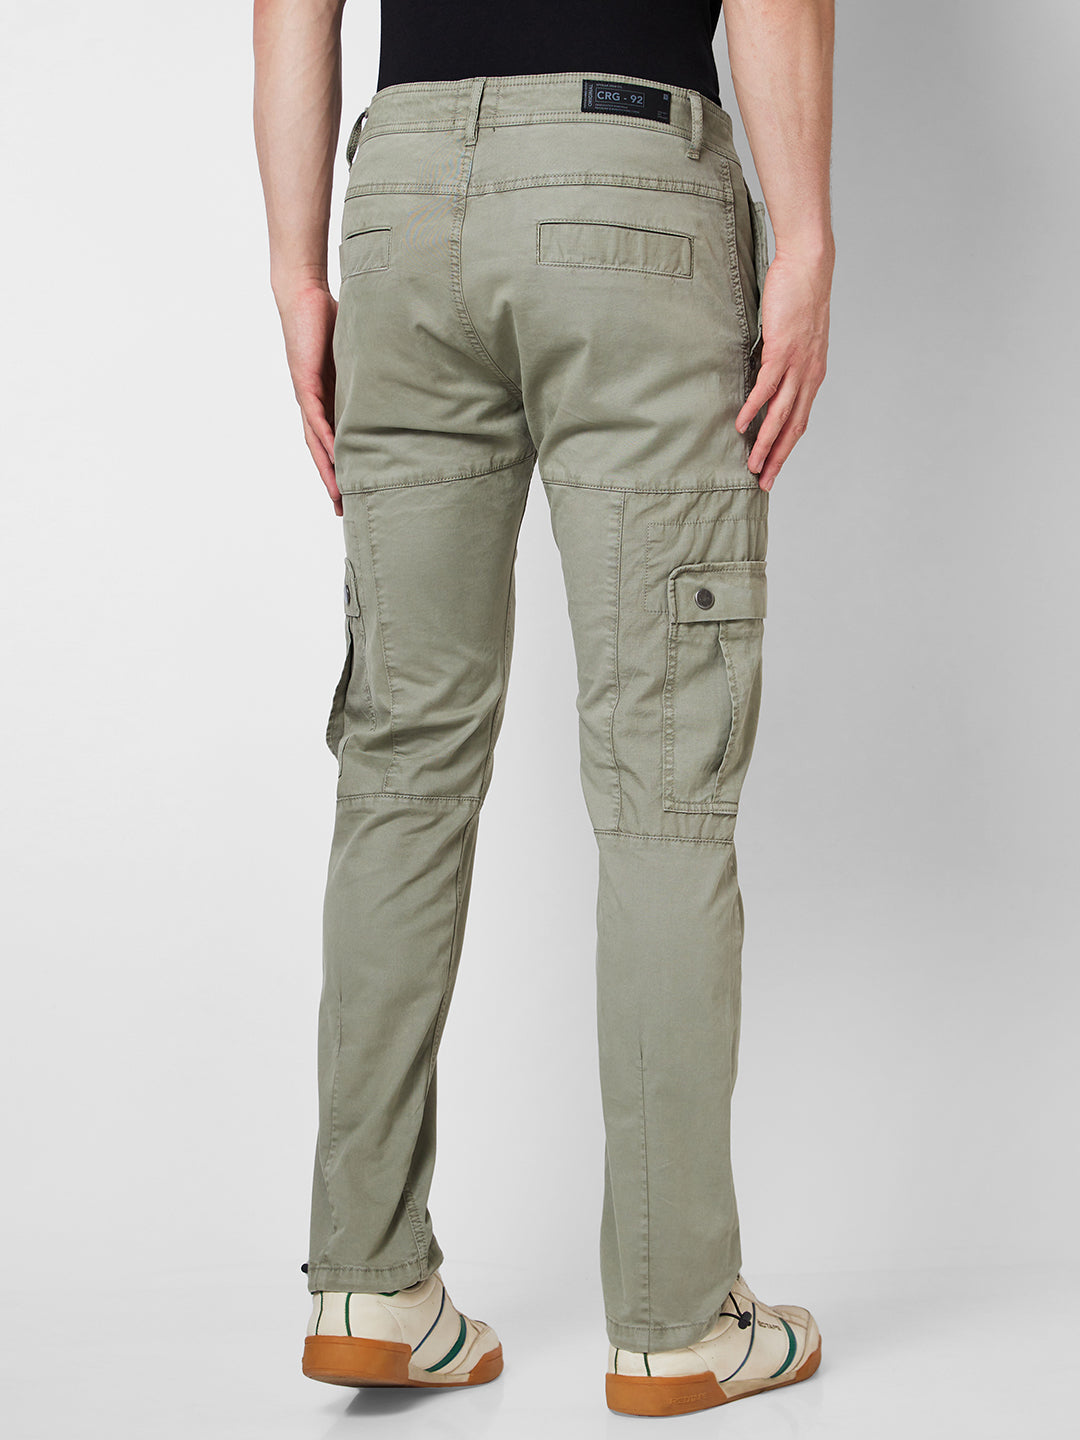 Buy Spykar Men Carbon Grey Cotton Stretch Slim Fit Jeans Kano online